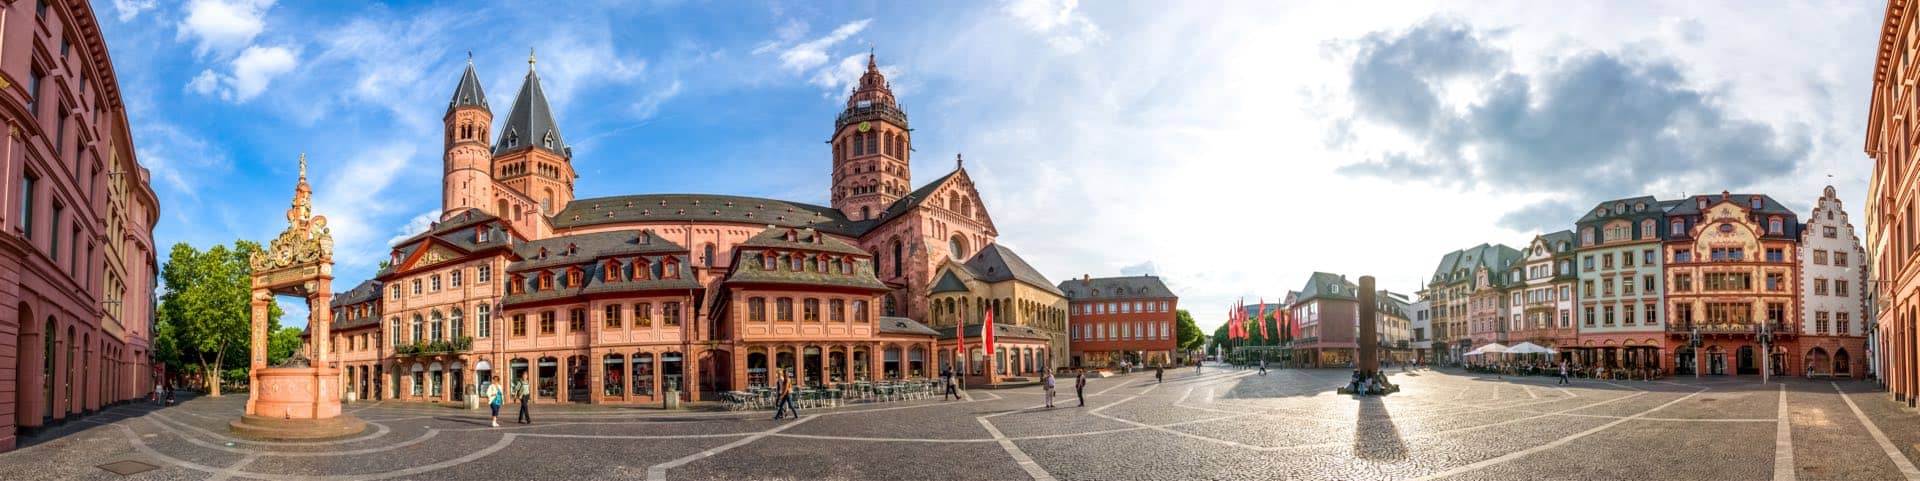 Mainz als Panorama Aufnahme